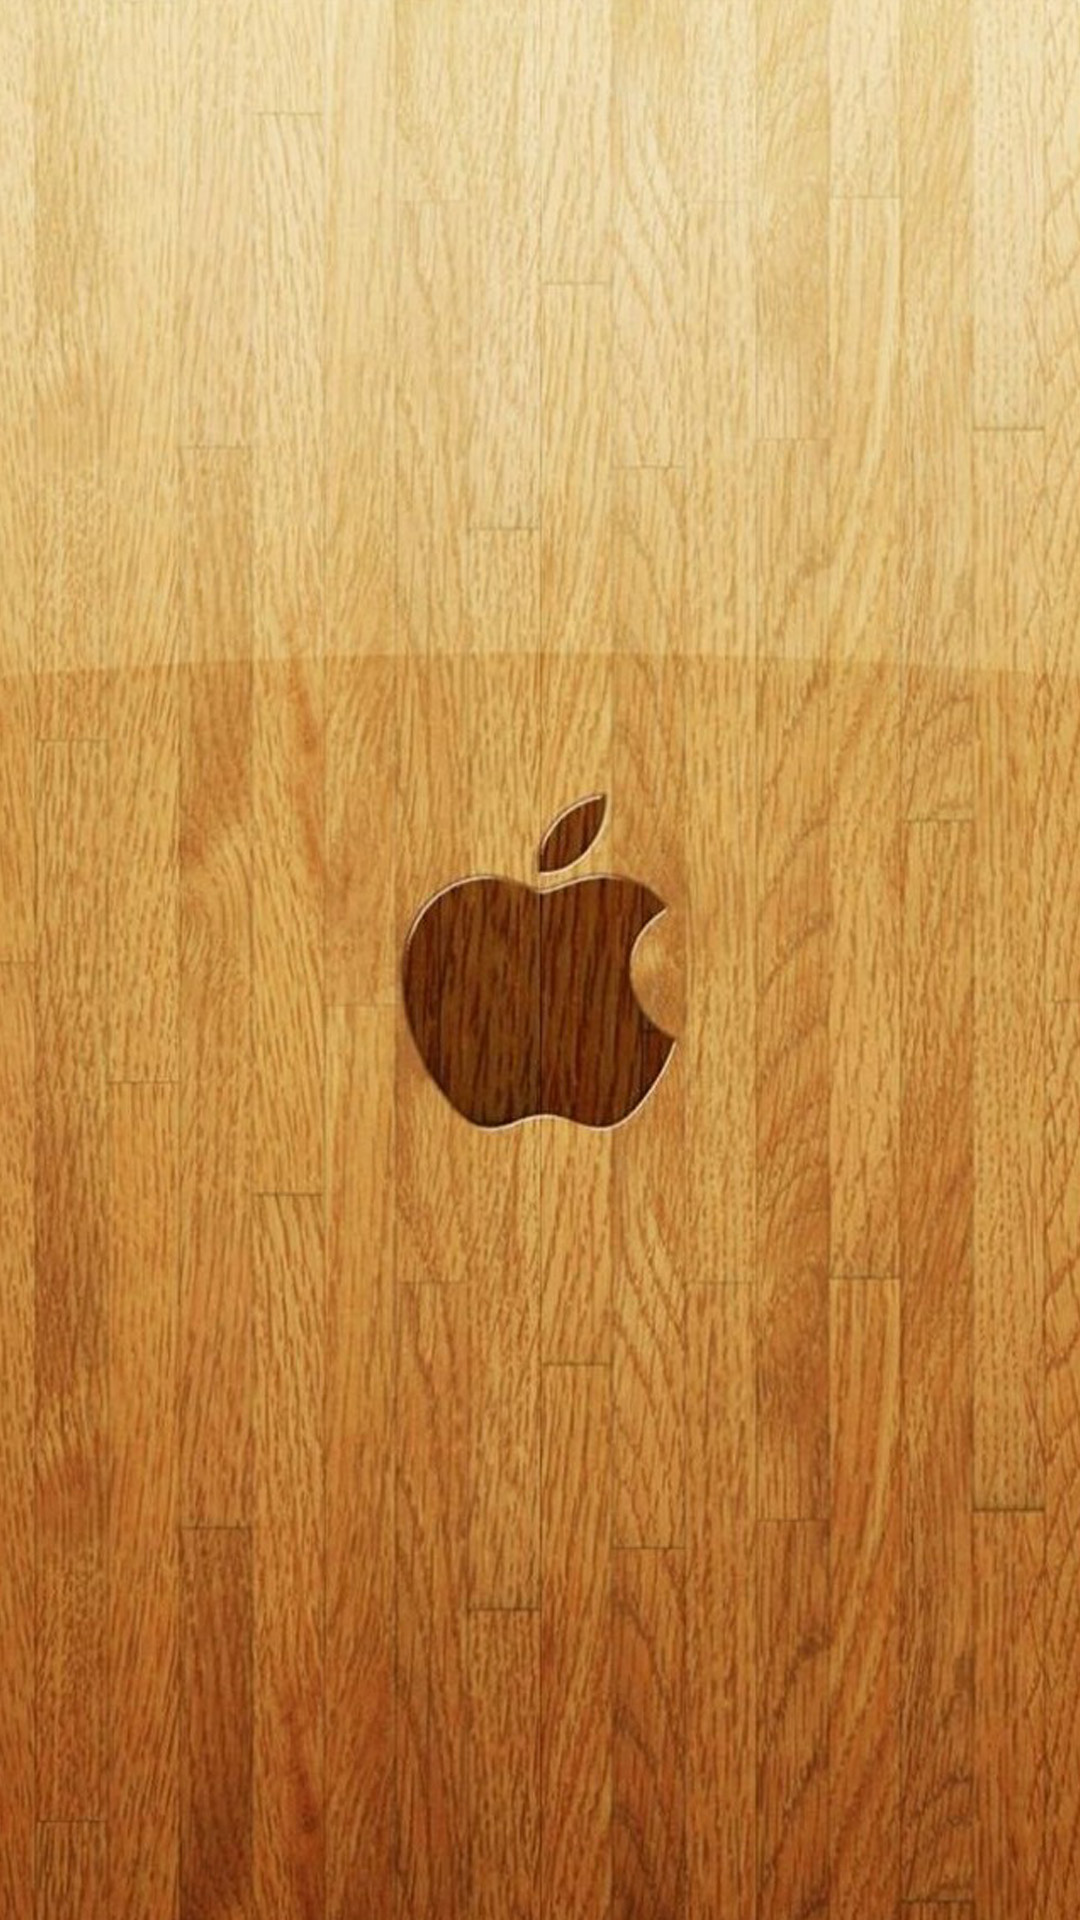 Apple iPhone Plus Wallpaper HD